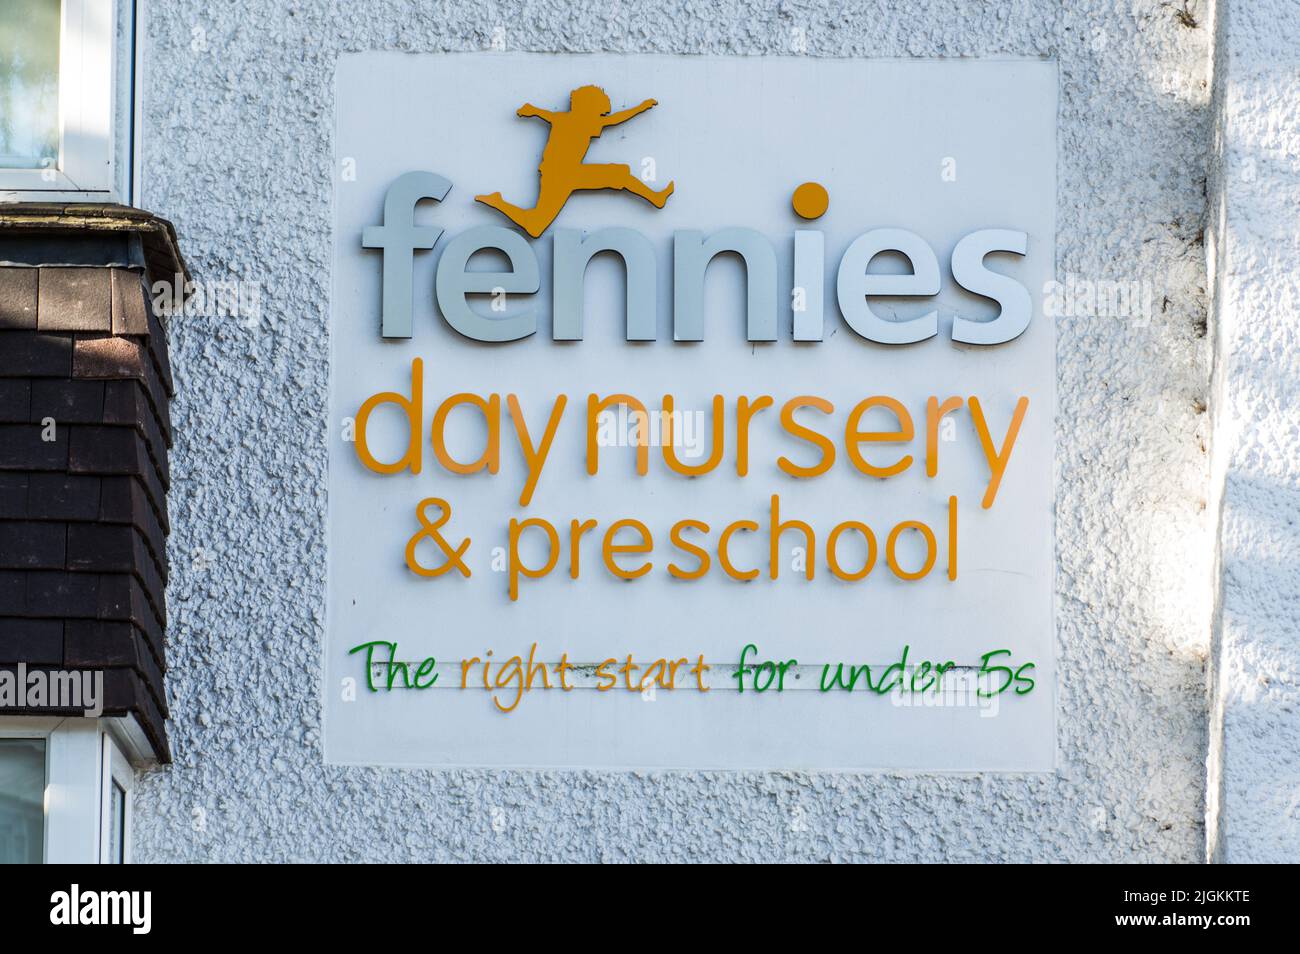 Fennies day nursery and Preschool Stock Photo